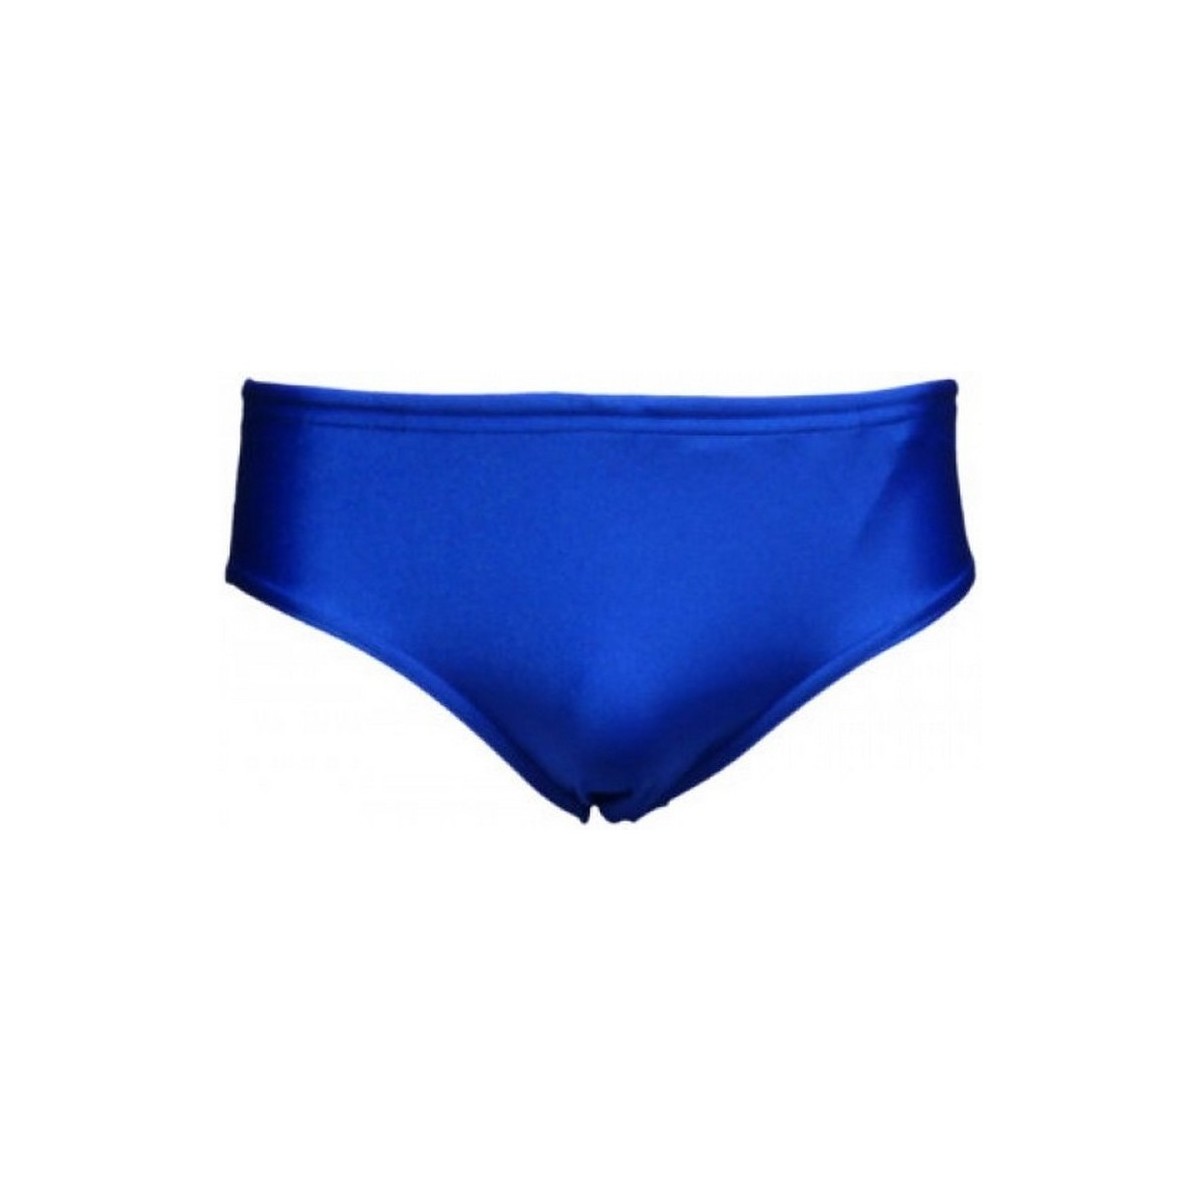 Vêtements Garçon Maillots / Shorts de bain Zika CS716 Bleu